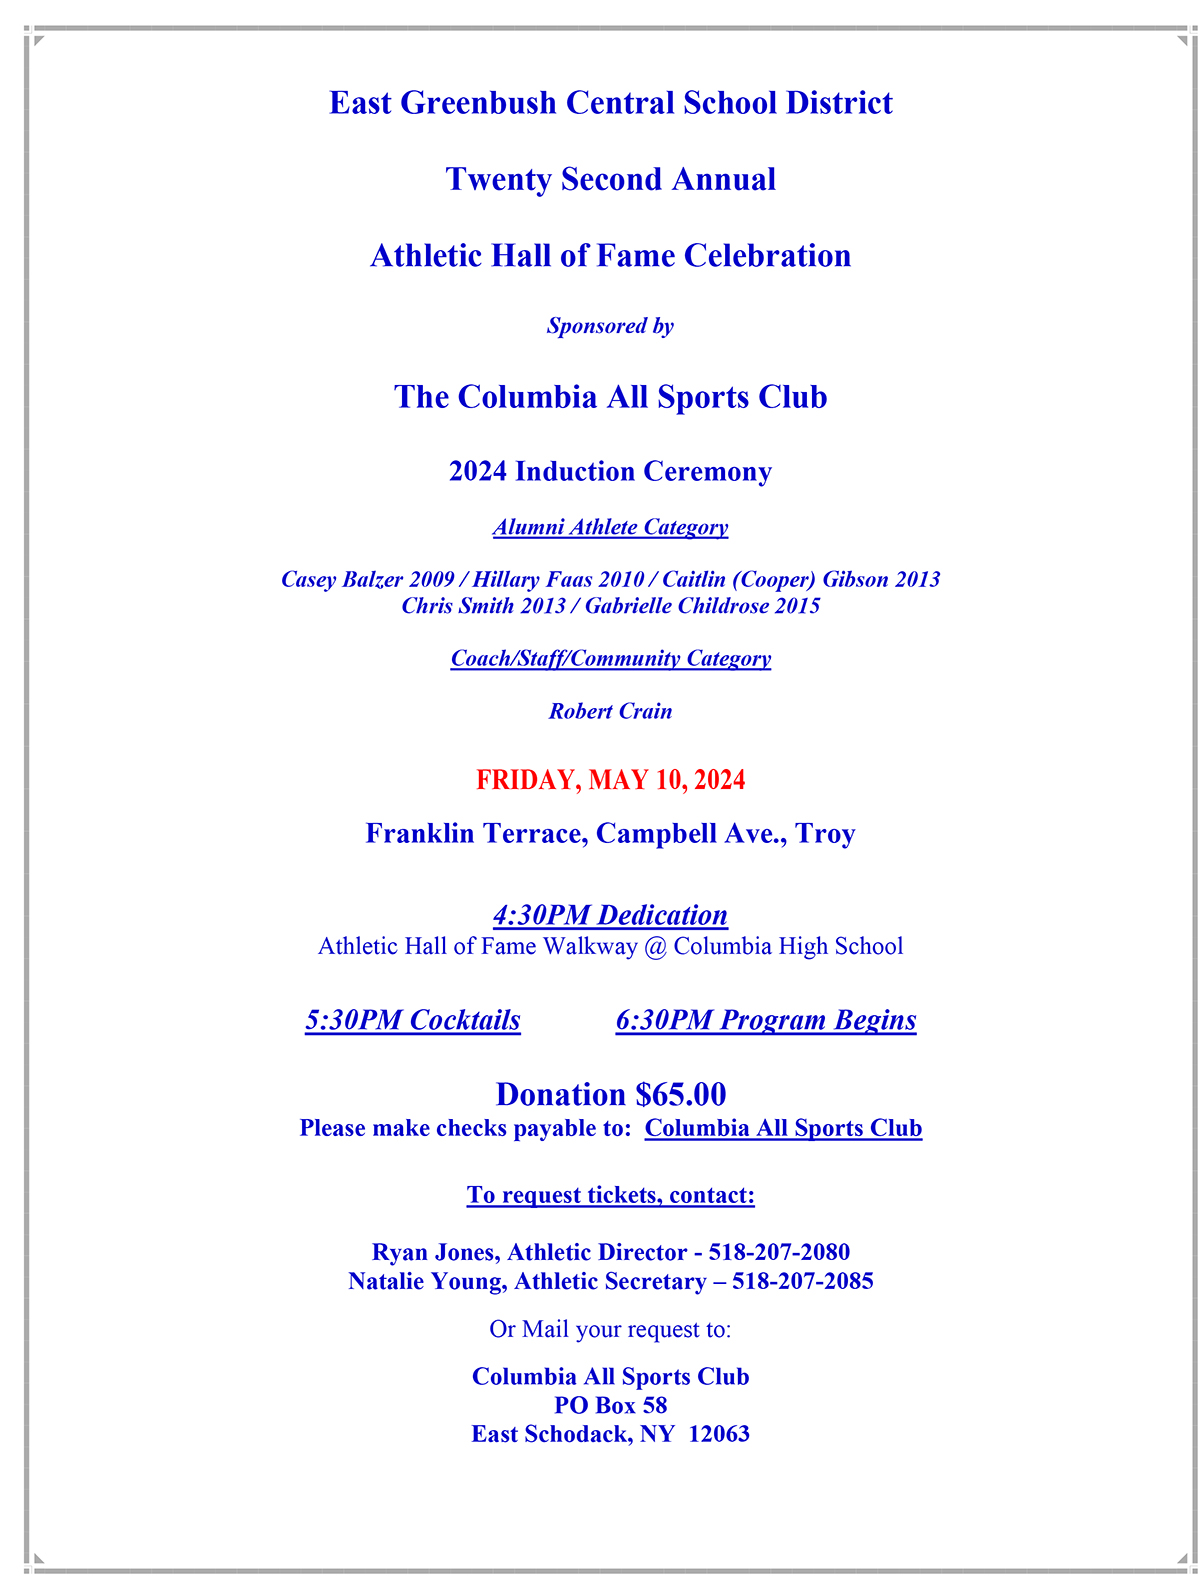 Athletic Hall of Fame Program 2024 web